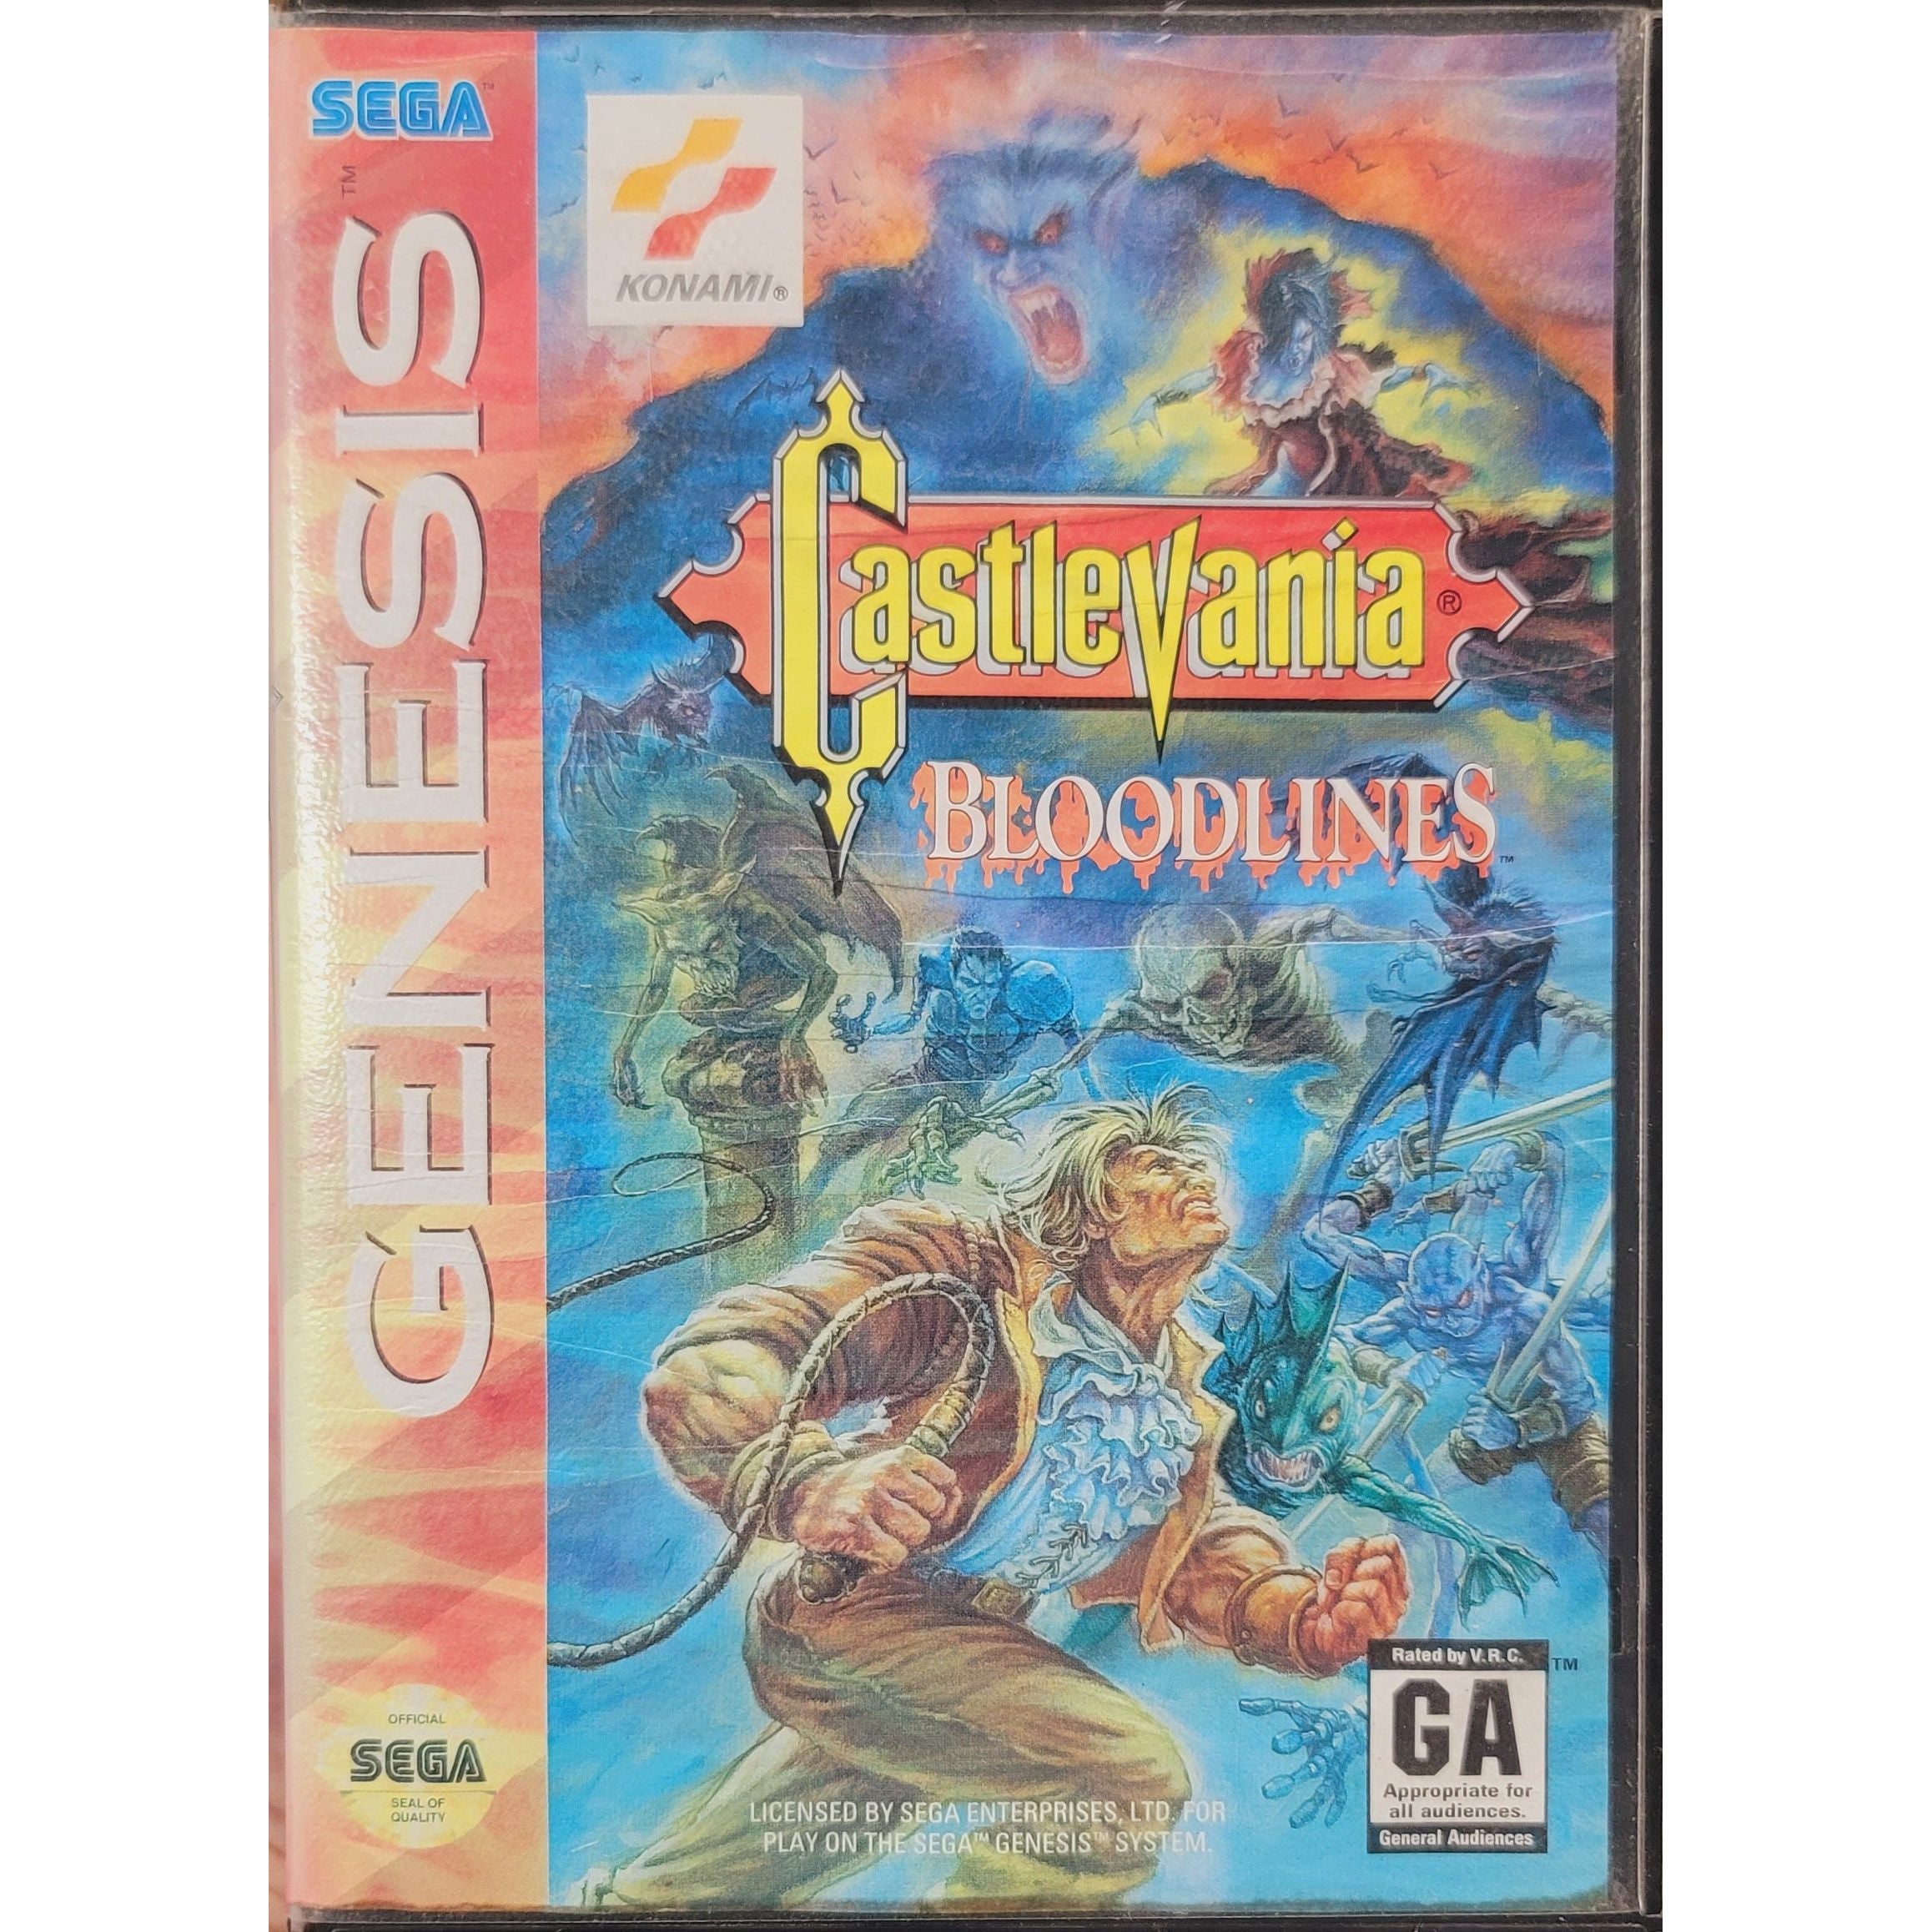 Genesis - Castlevania Bloodlines (In Case / Rough Cover Art)